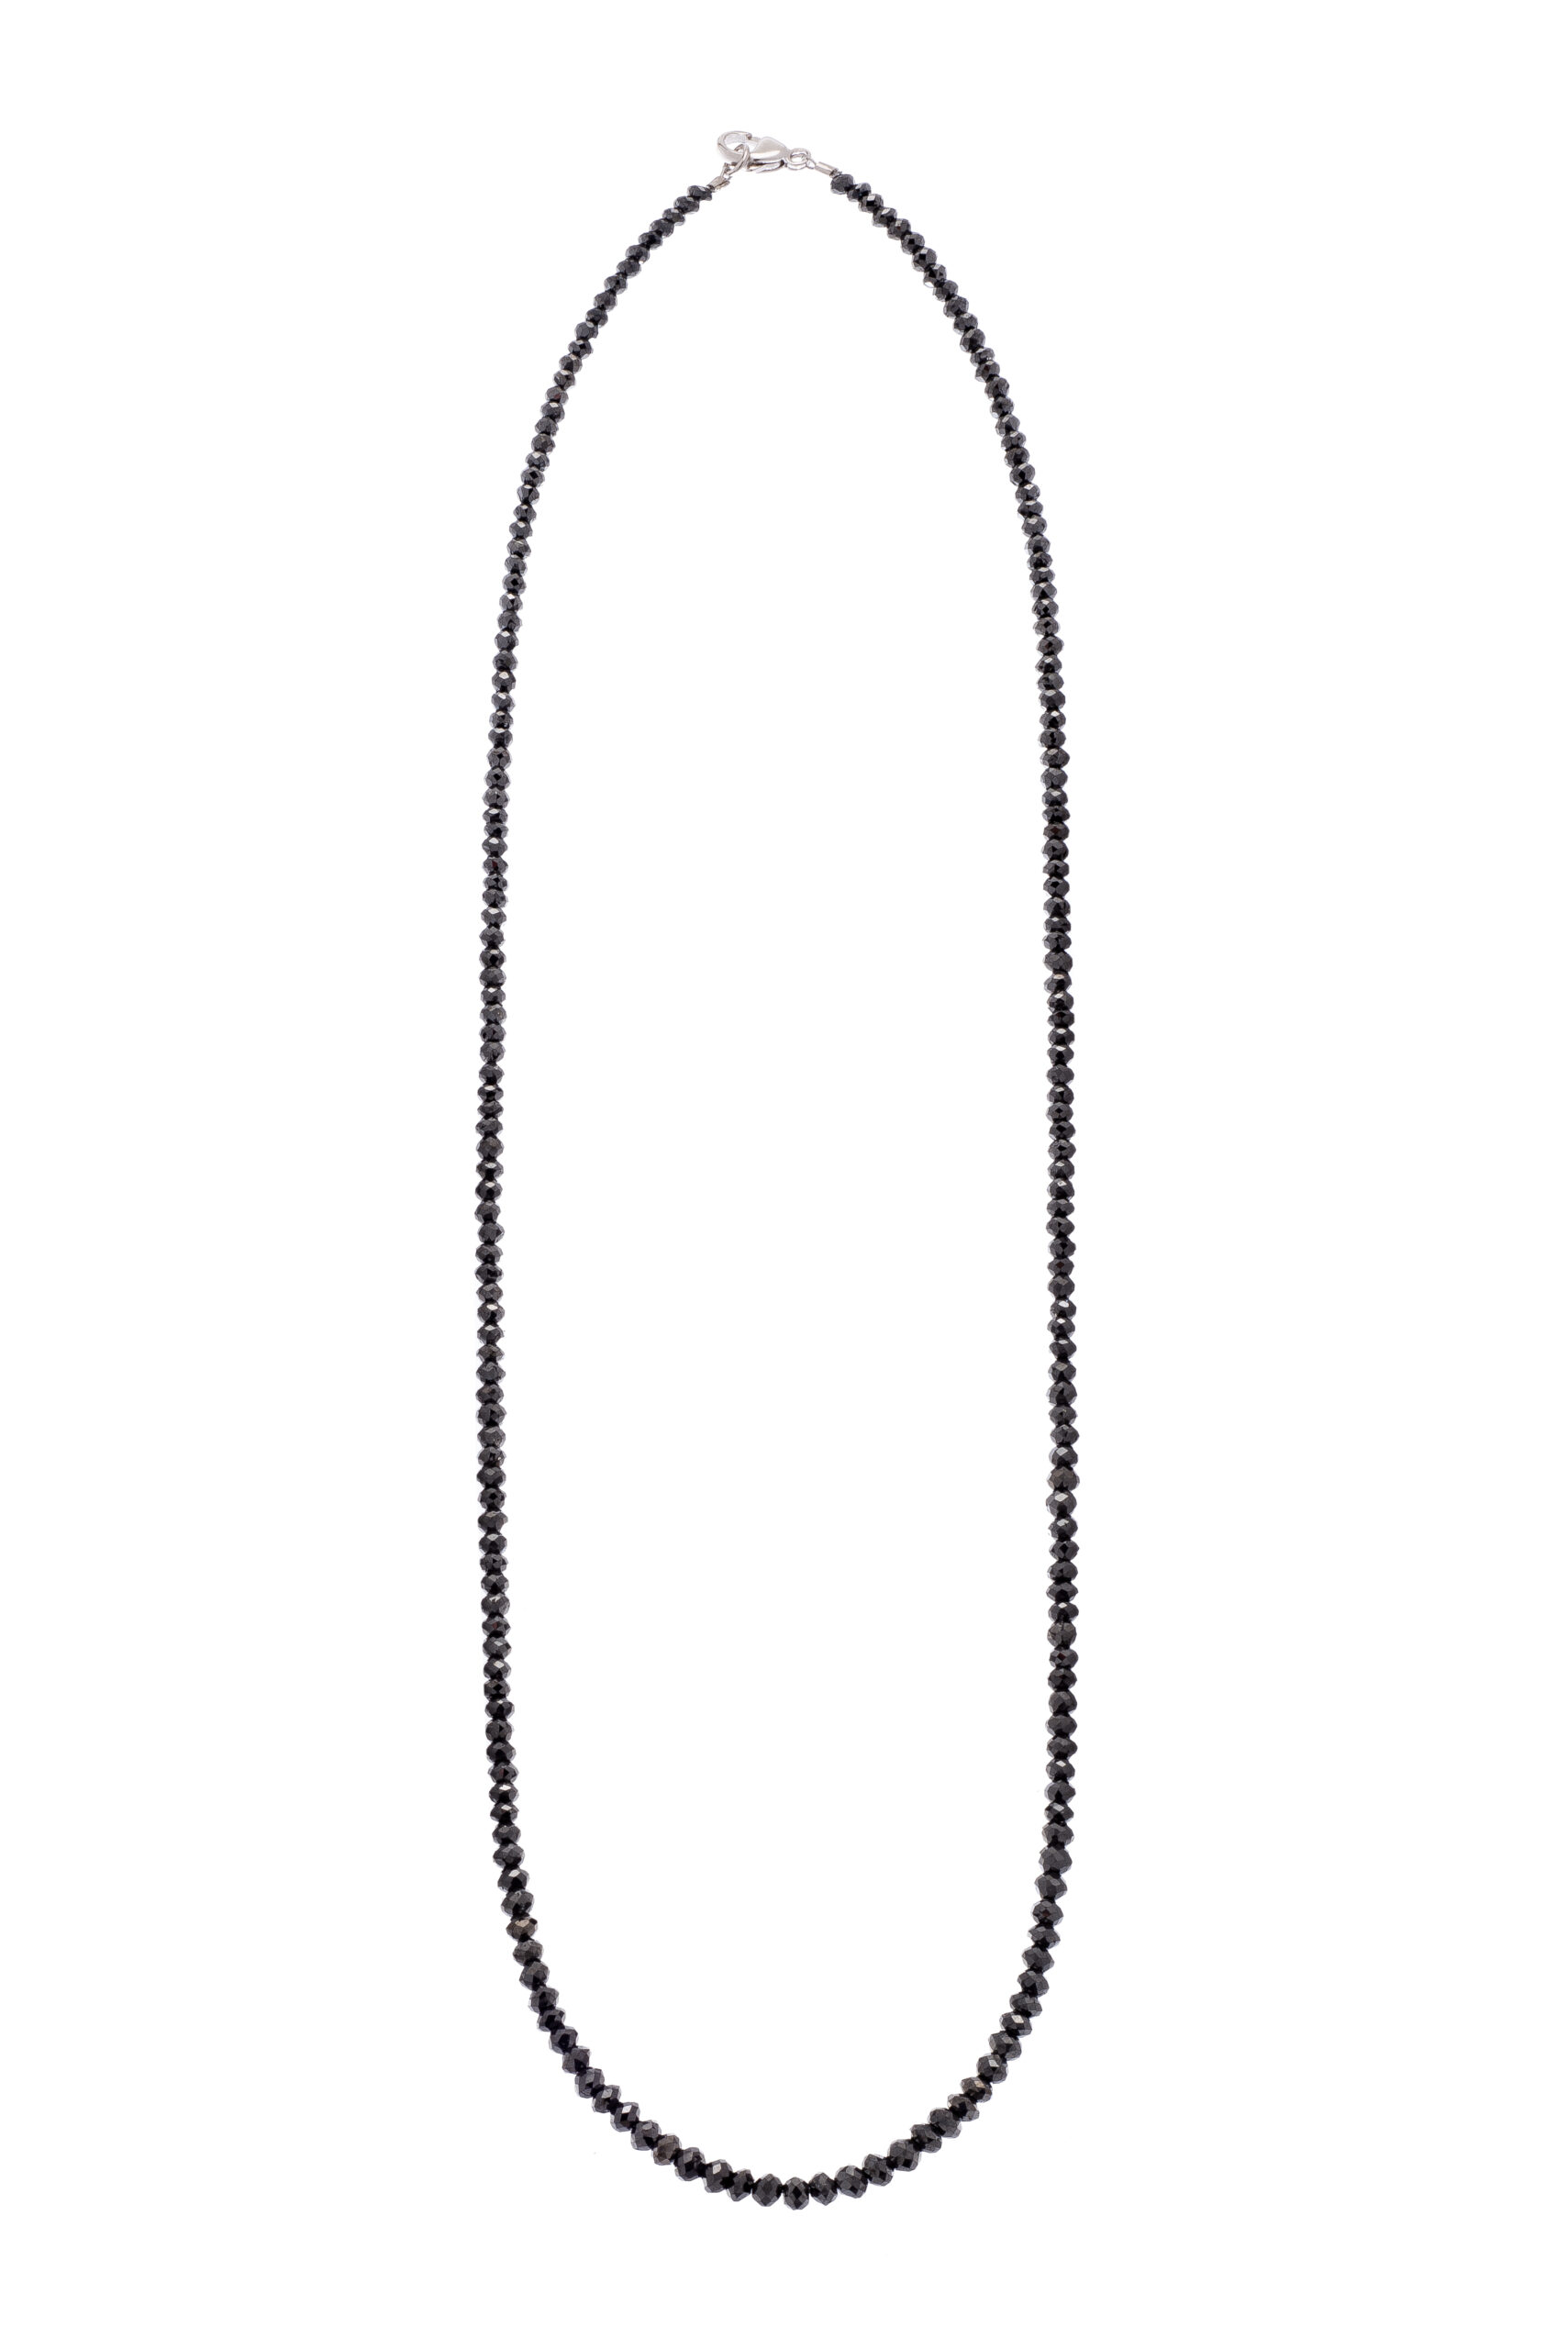 24 Inch Black Diamond Necklace